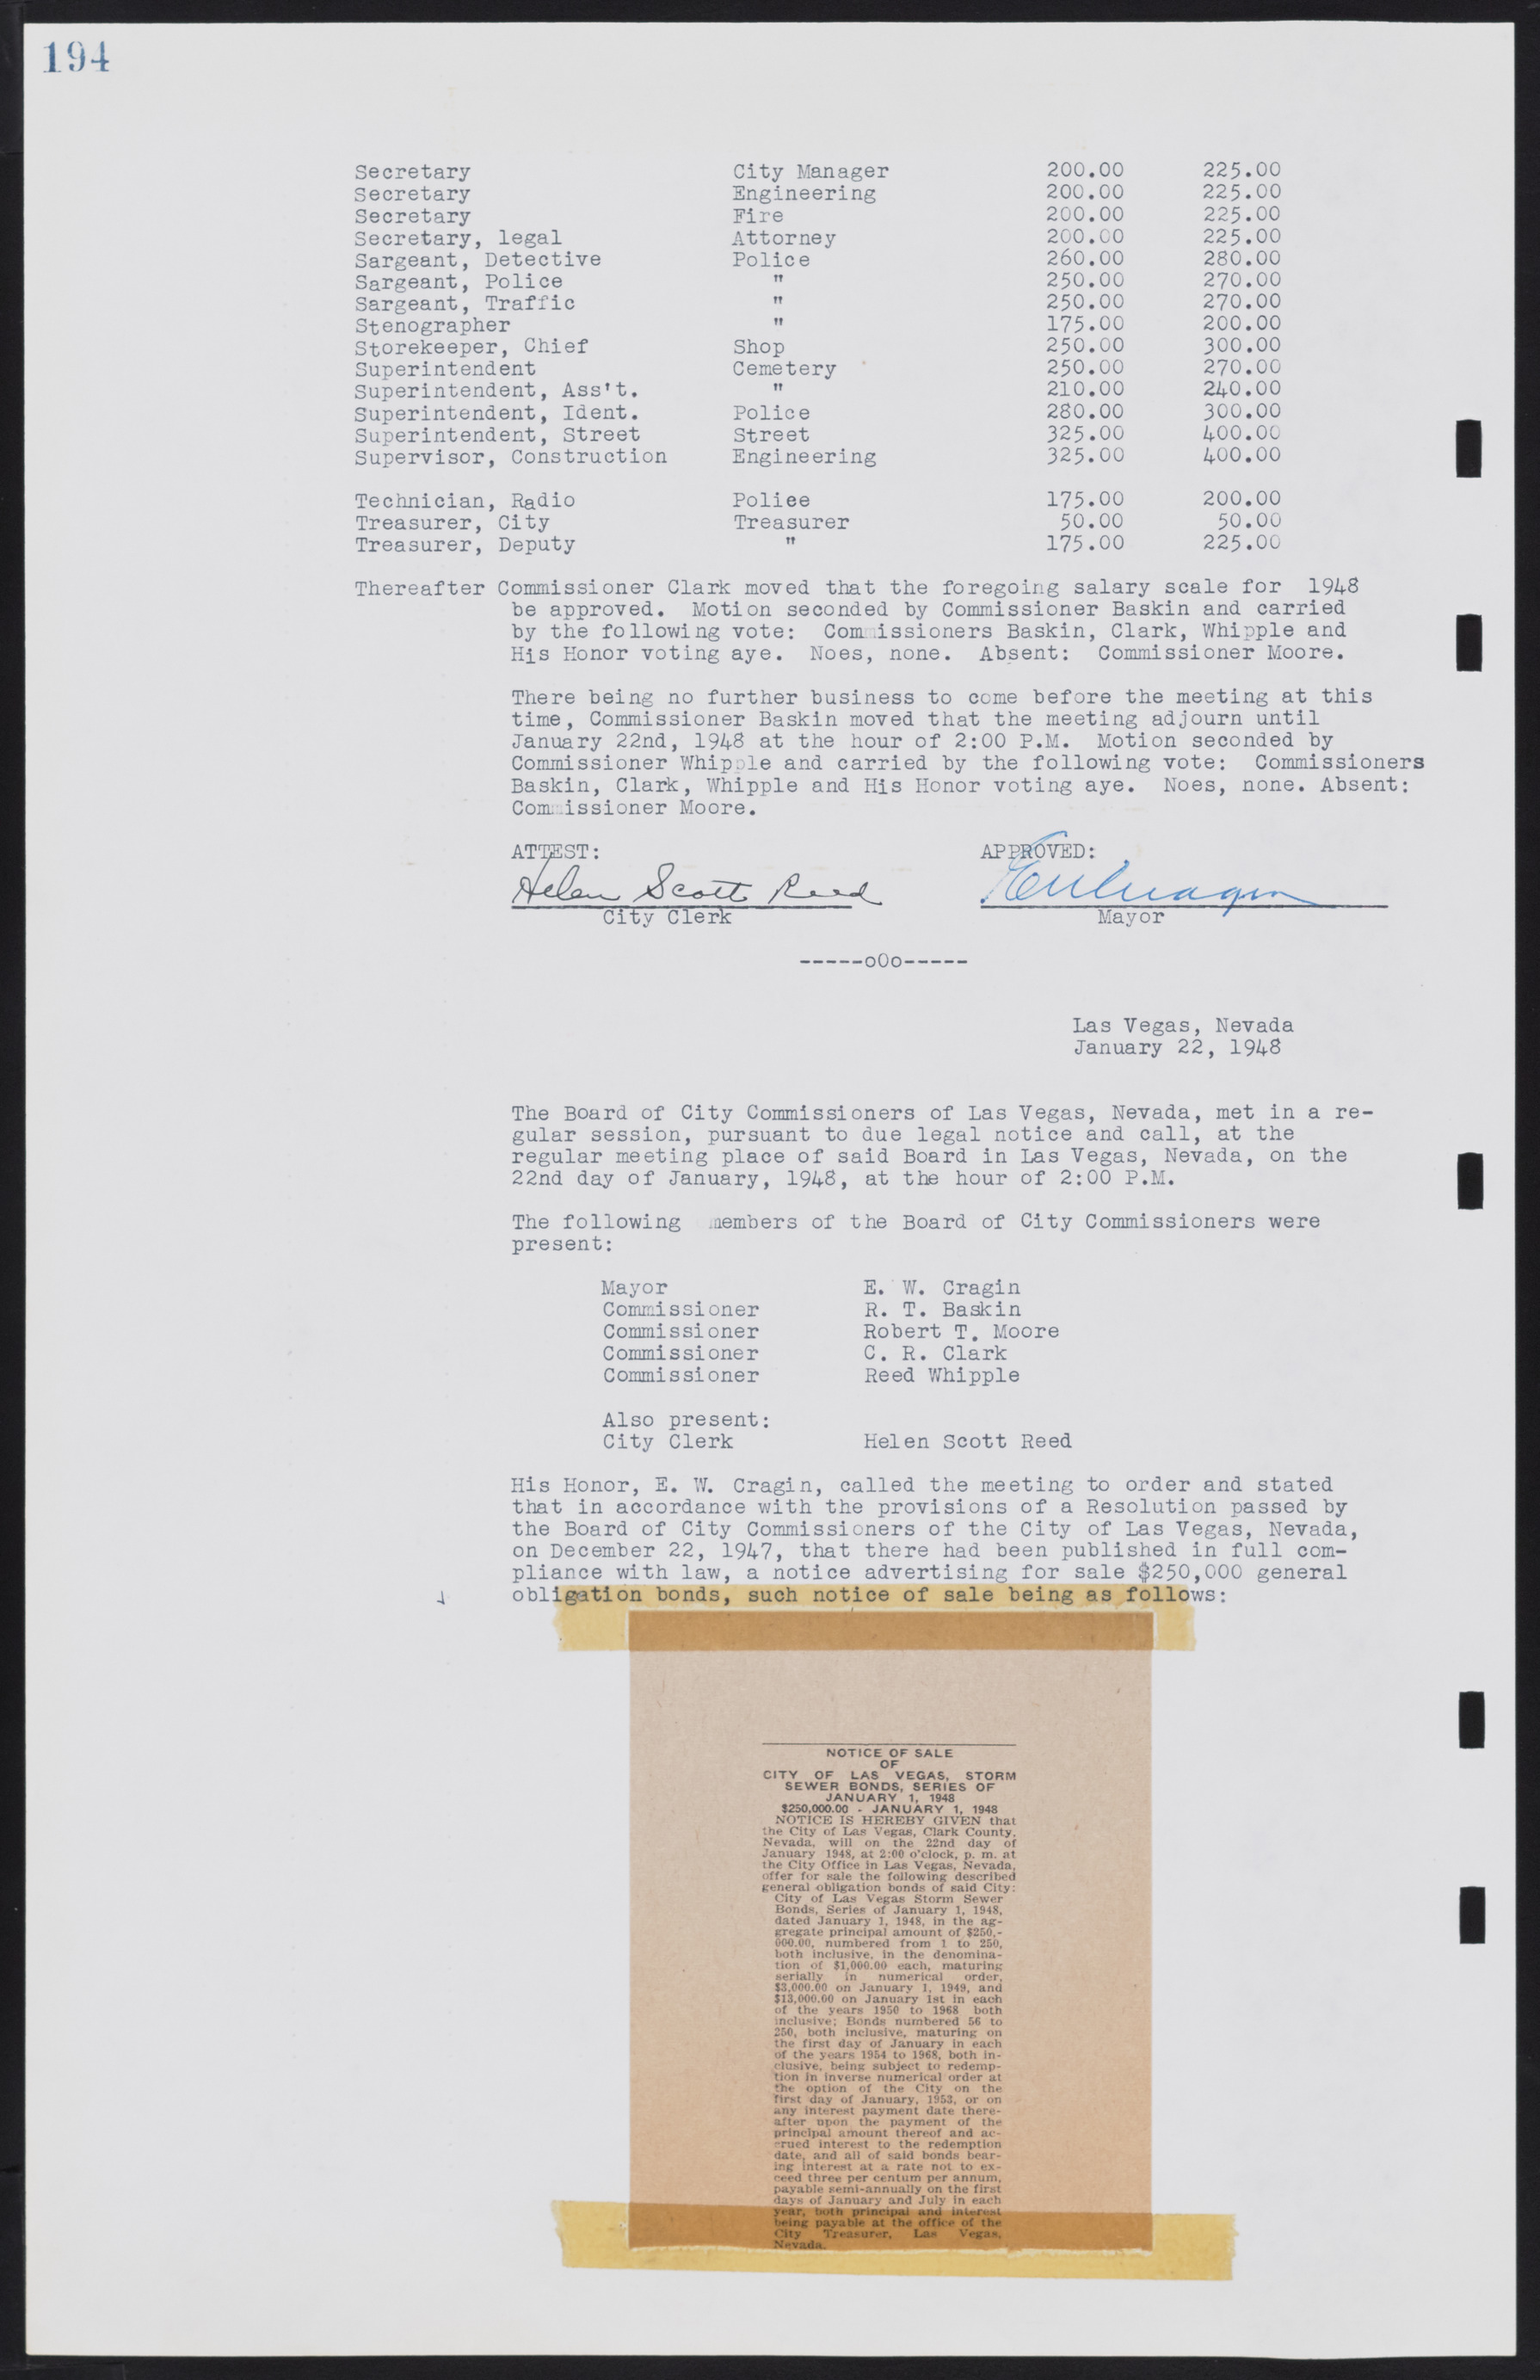 Las Vegas City Commission Minutes, January 7, 1947 to October 26, 1949, lvc000006-216